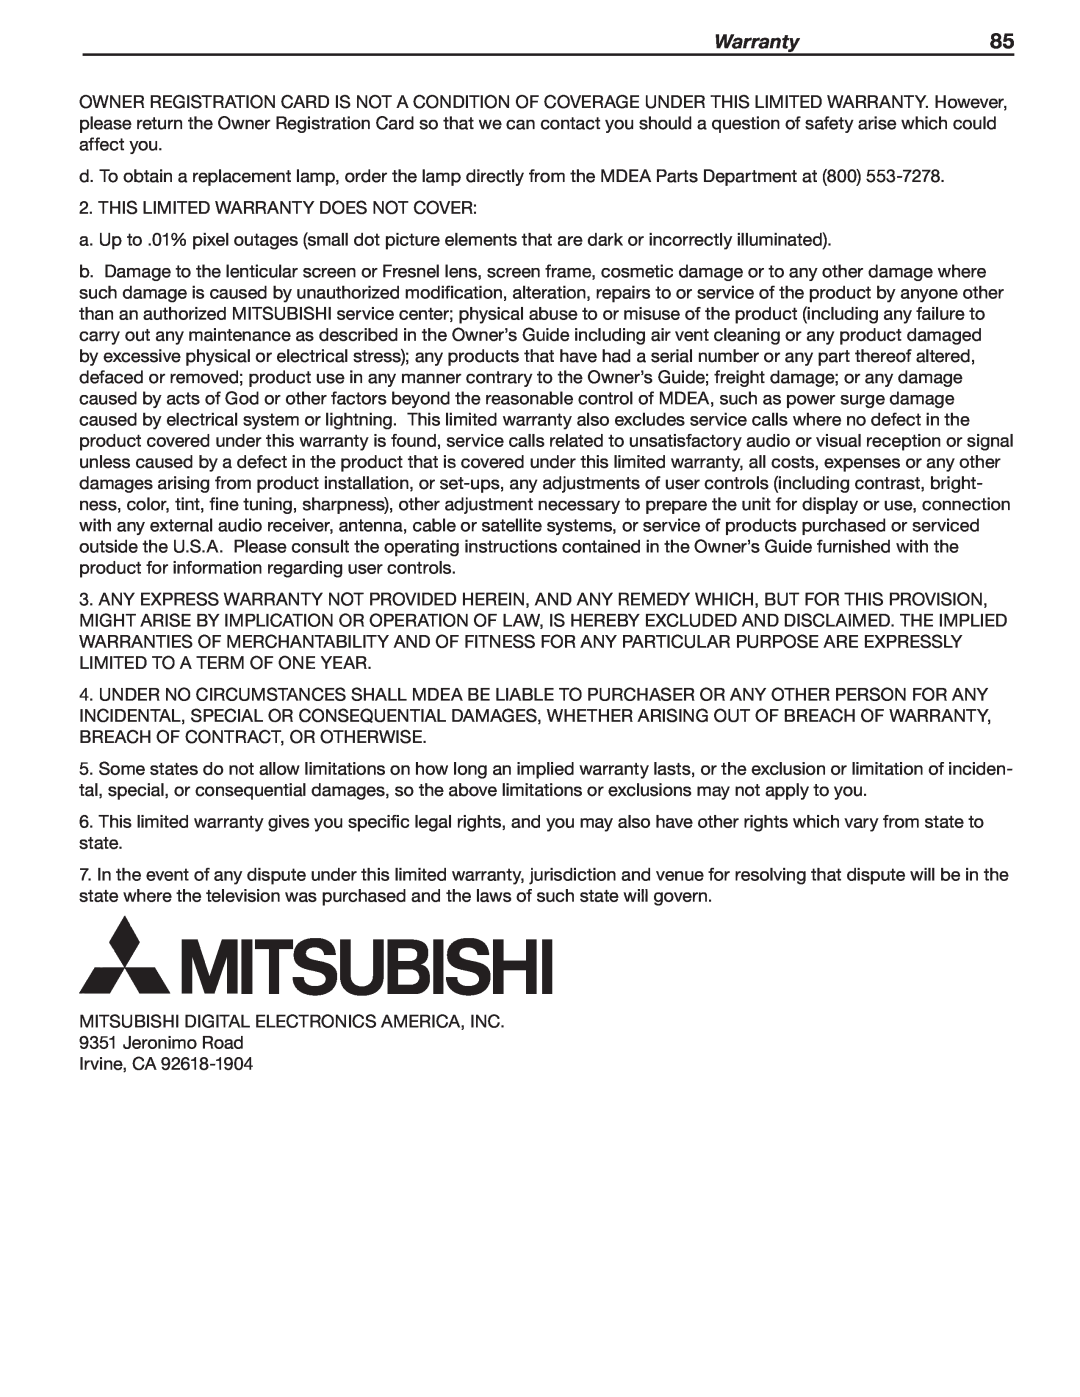 Mitsubishi Electronics 737, 837, C9 manual Warranty85 